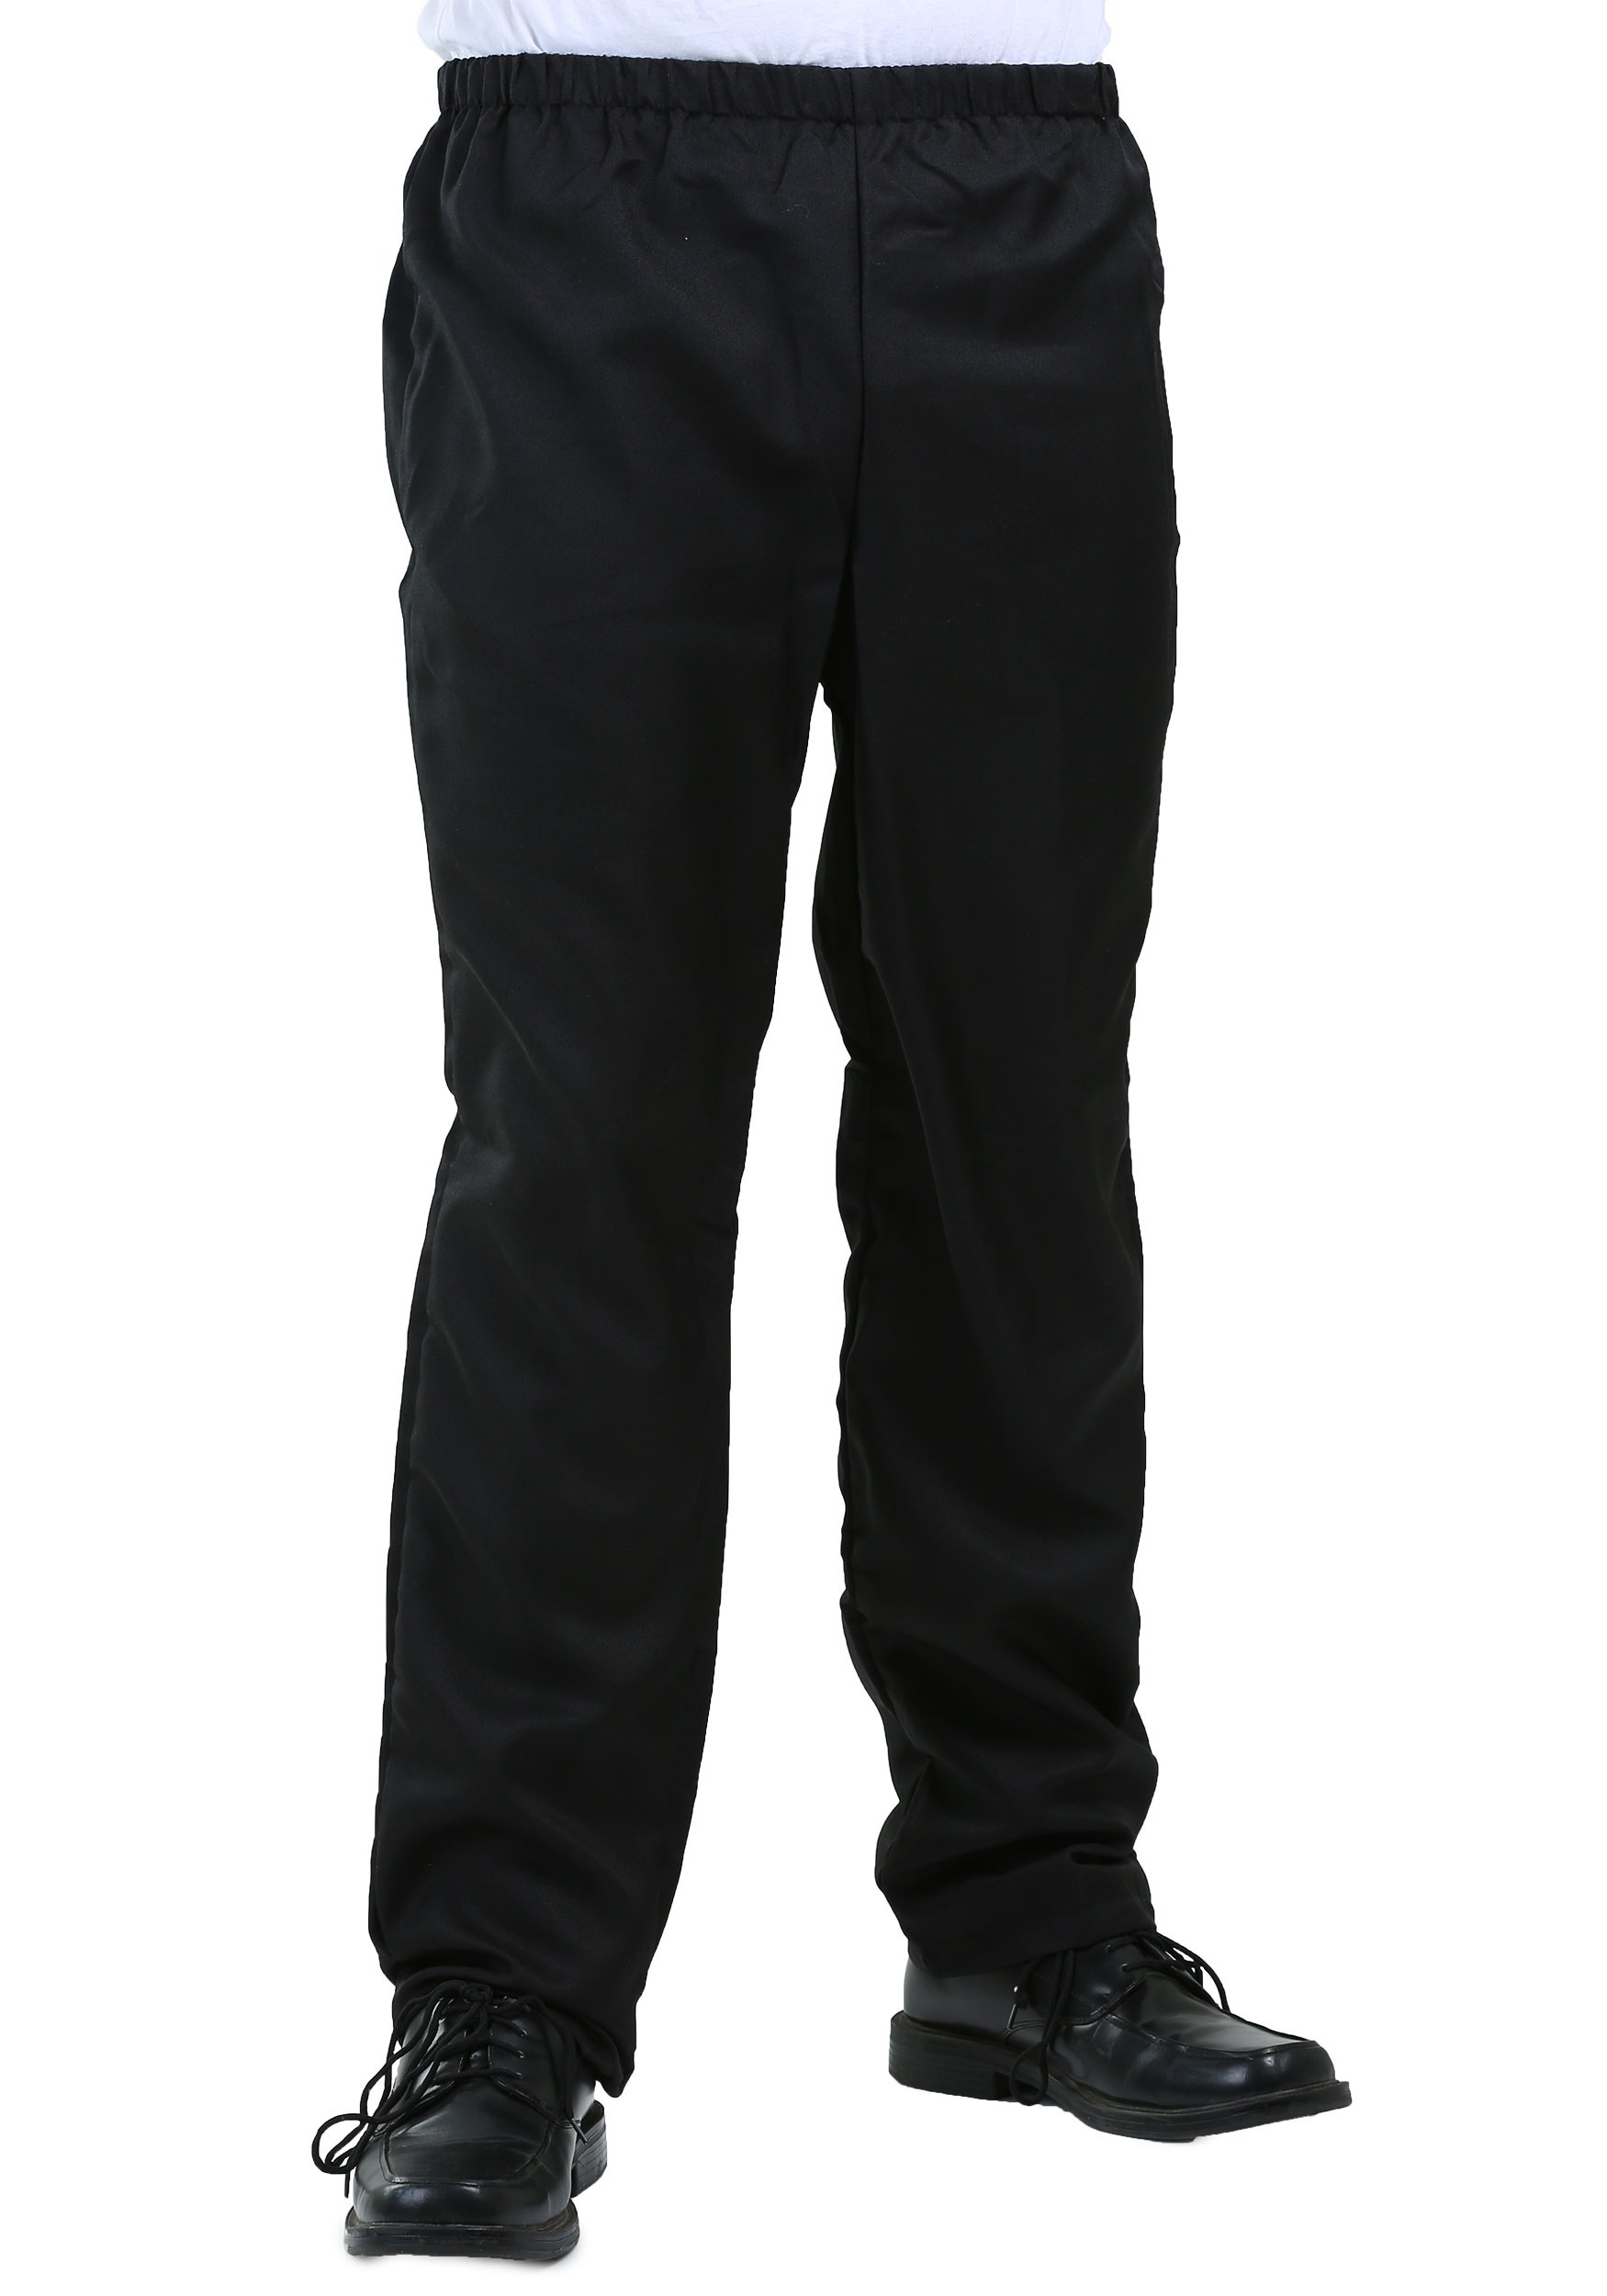 LEEy-World Cargo Pants Mens Stretch Convertible Pants Water Resistant Quick  Dry Zip Off Cagro Hiking Pants Green,4XL - Walmart.com